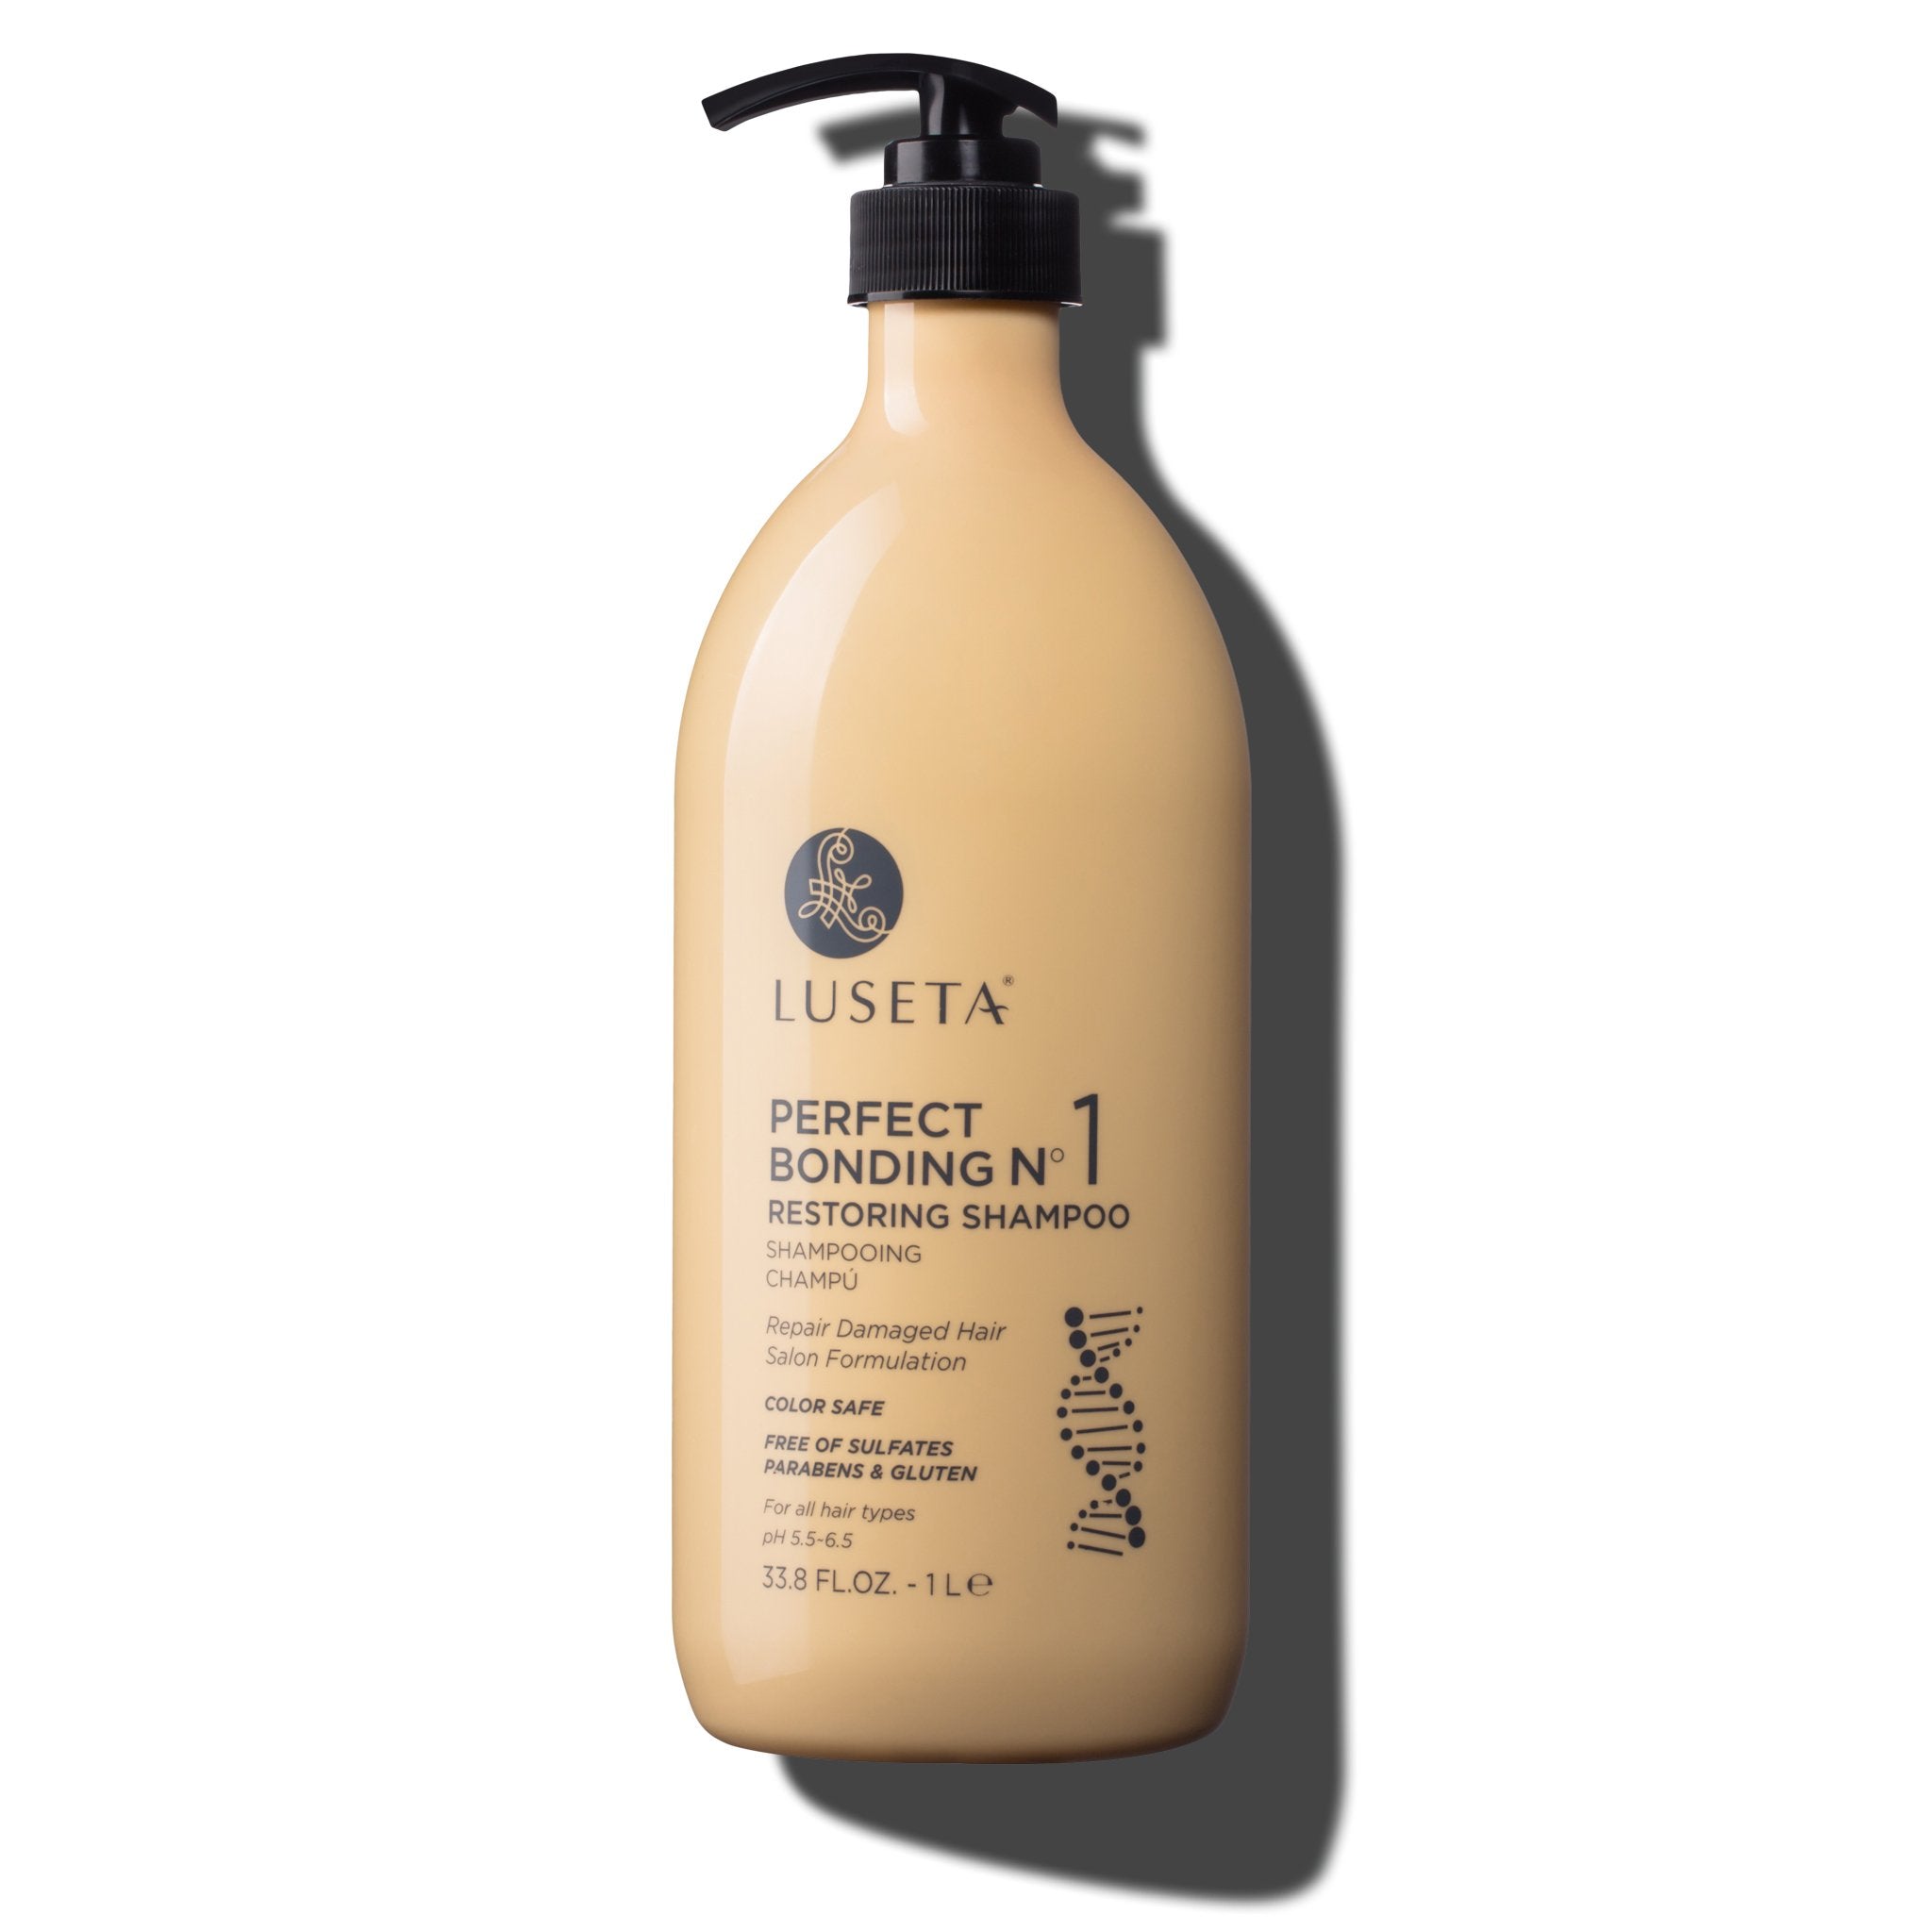 alarm Det Lægge sammen Perfect Bonding Restoring Shampoo | Luseta Beauty